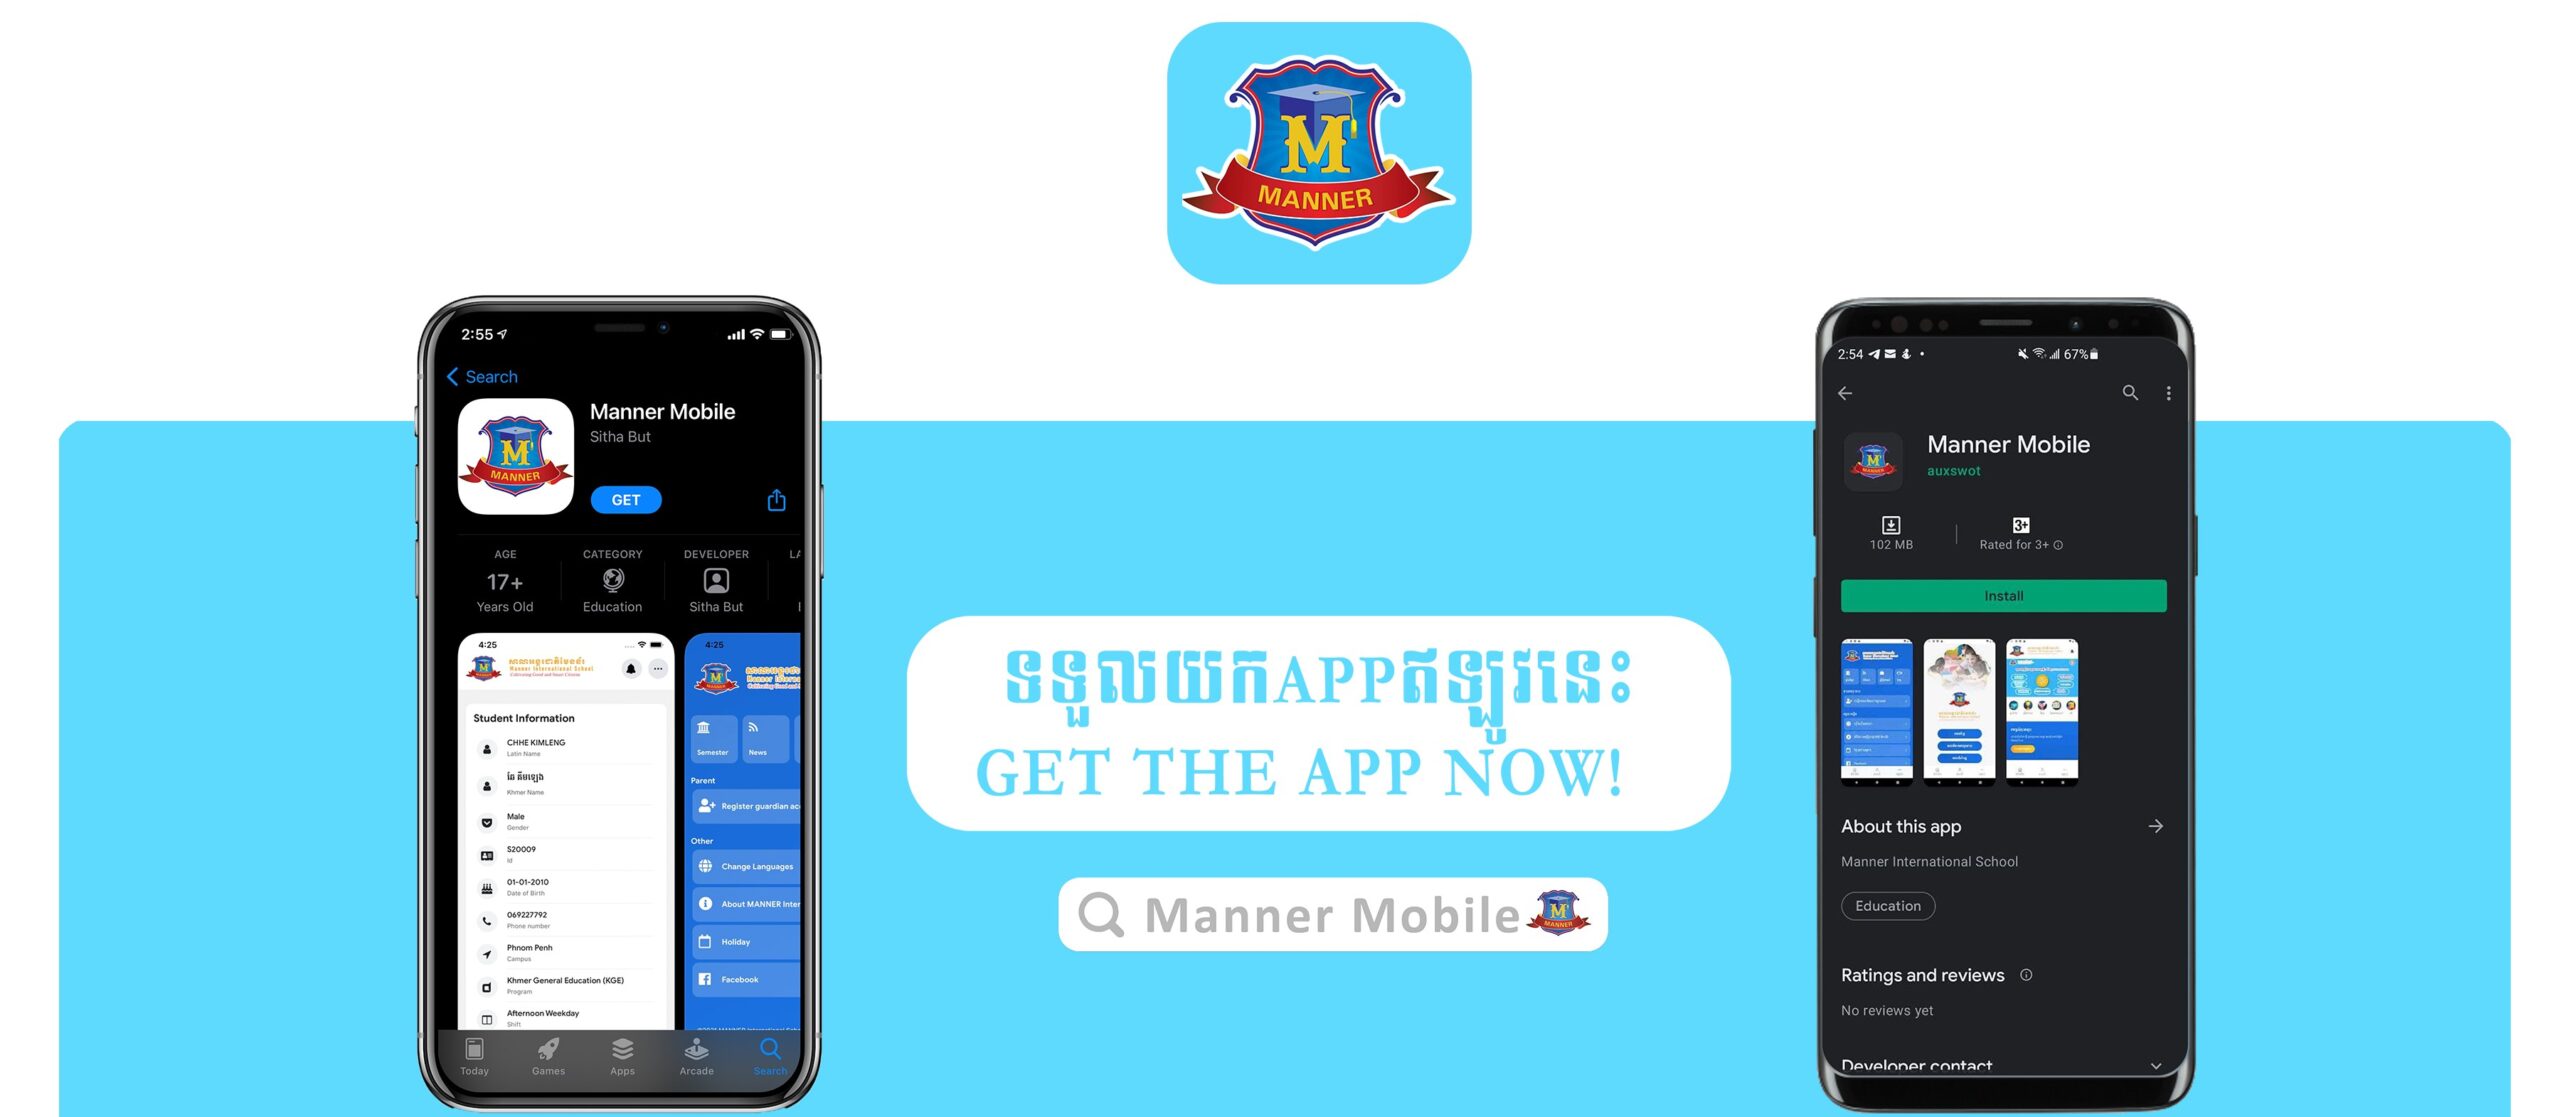 Manner Mobile App គឺជាដៃគូដ៏ល្អសម្រាប់ការសិក្សារបស់កូនលោកអ្នក